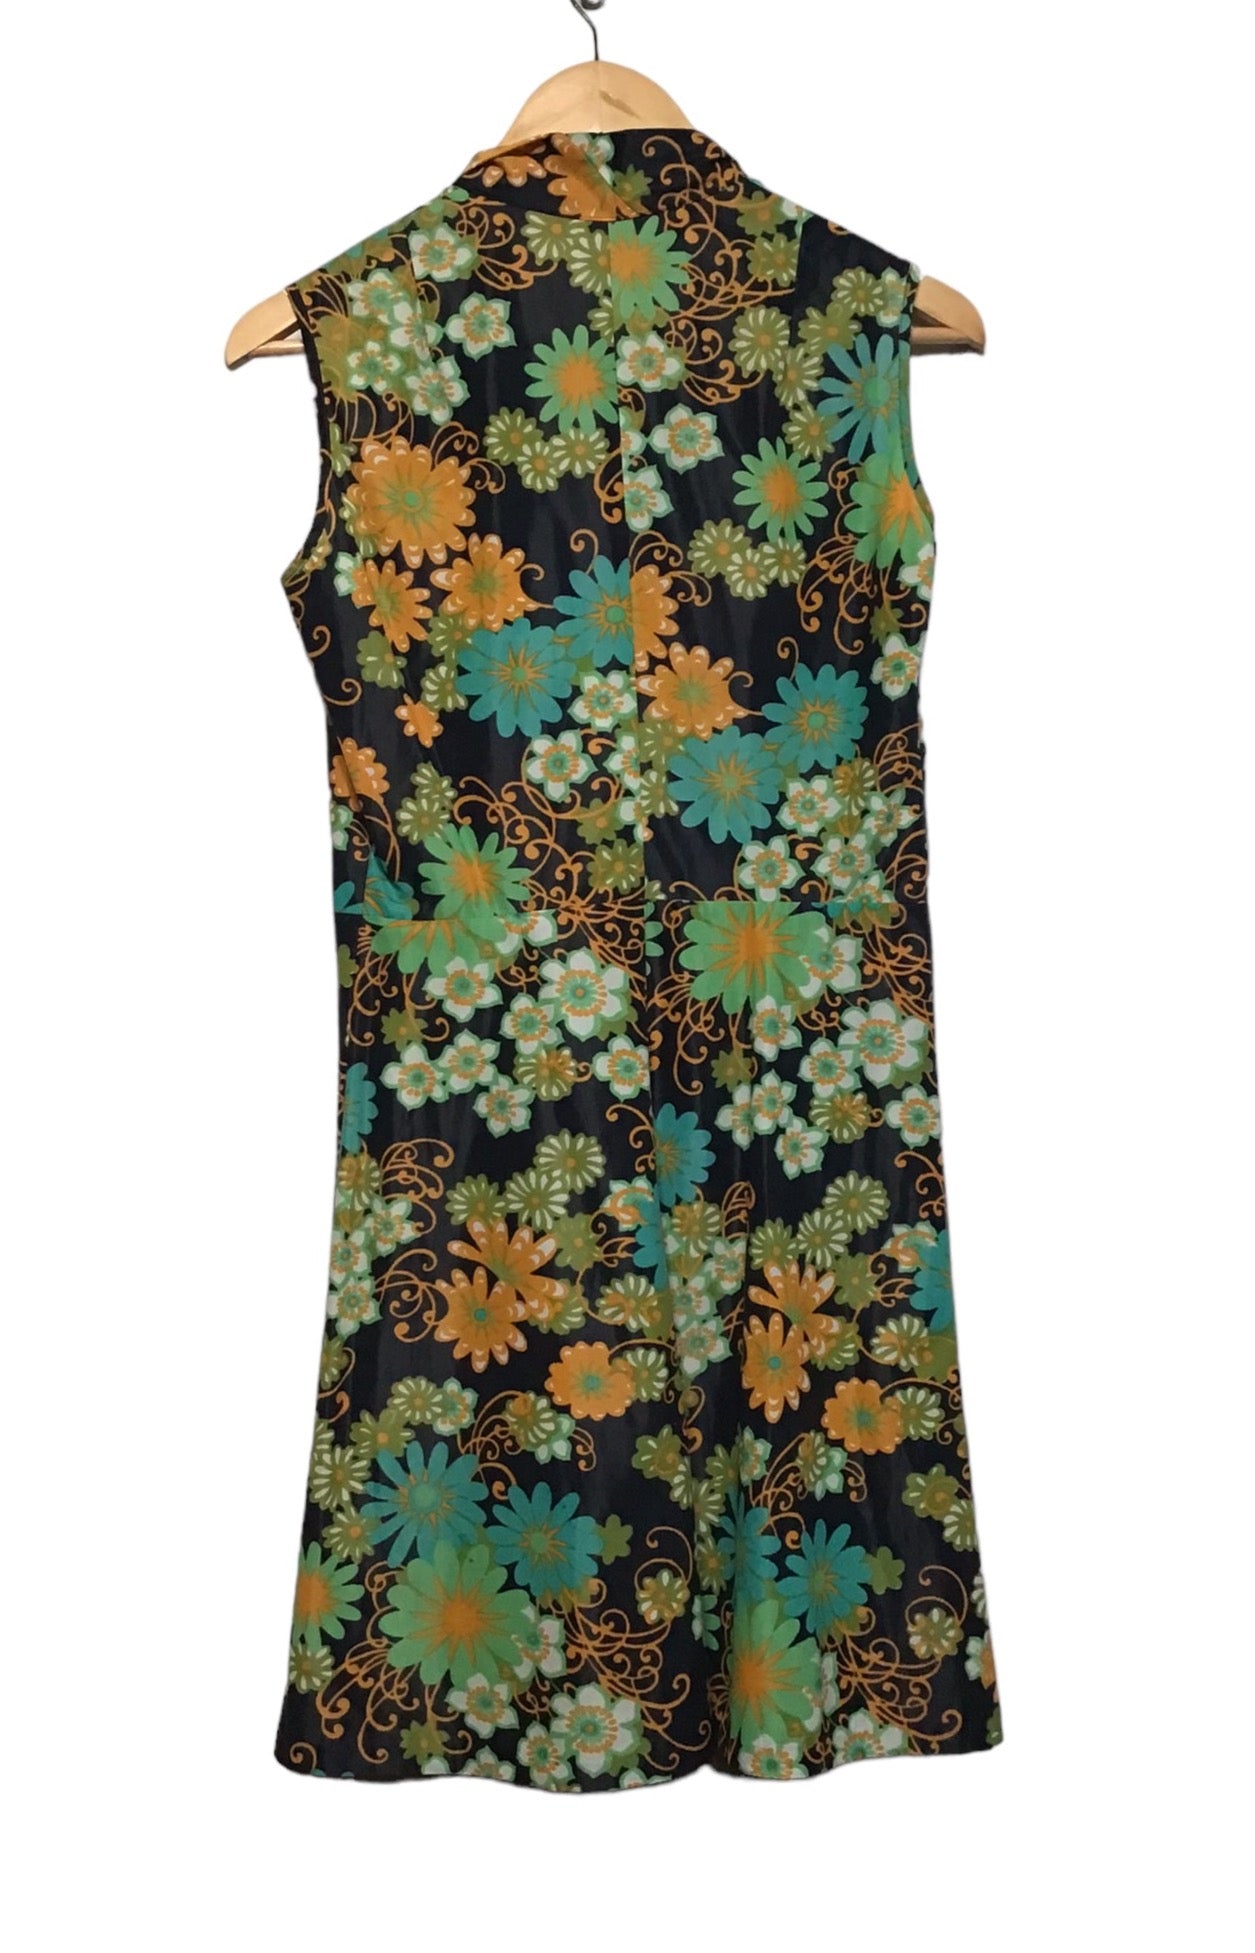 Floral Summer Dress (Size M)